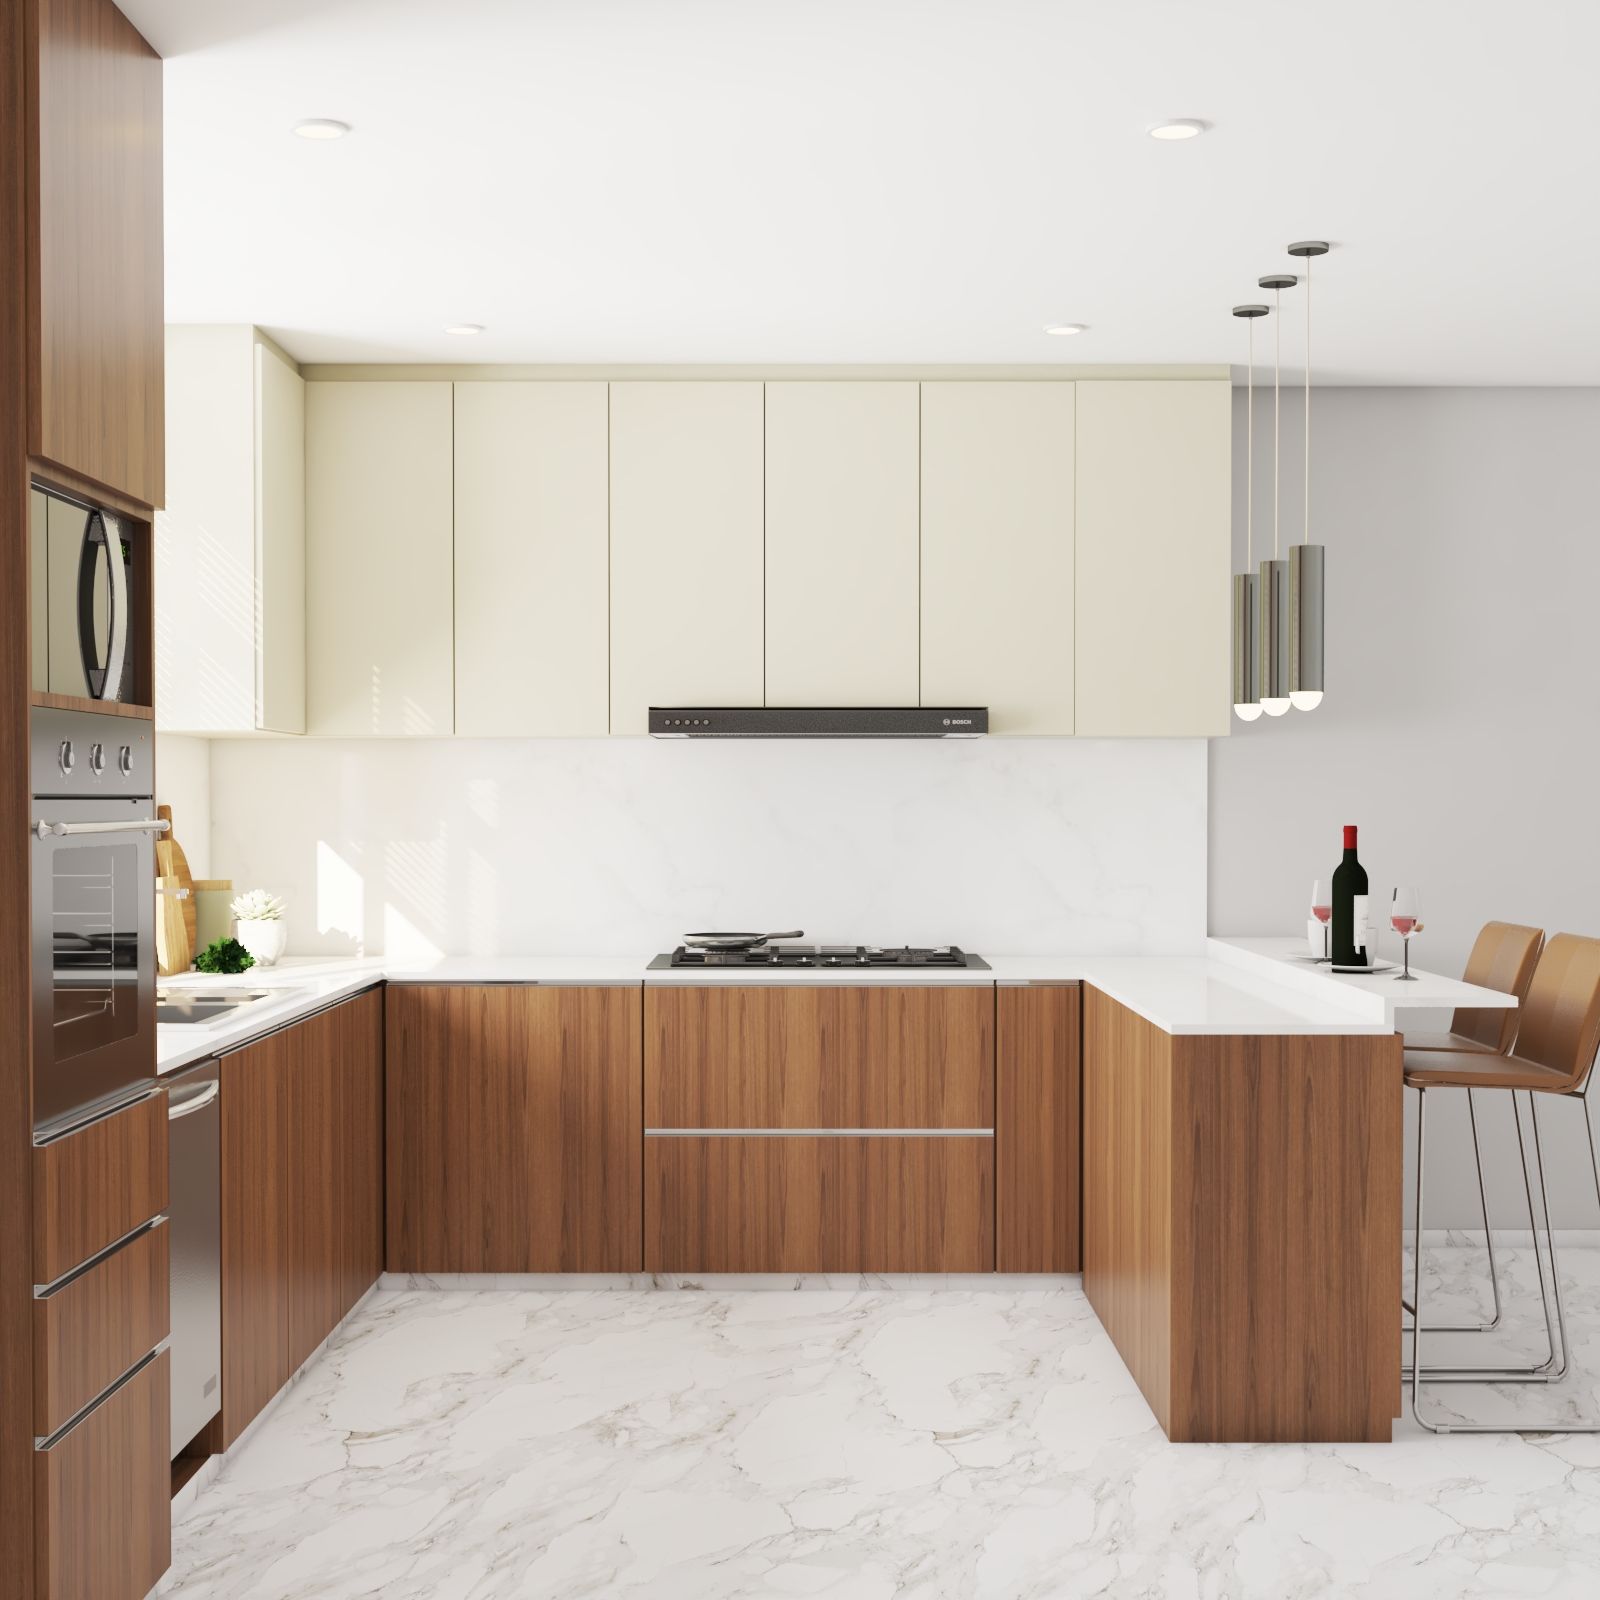 Classic U Shape Kitchen Cabinet Design With Wooden Grain Laminates